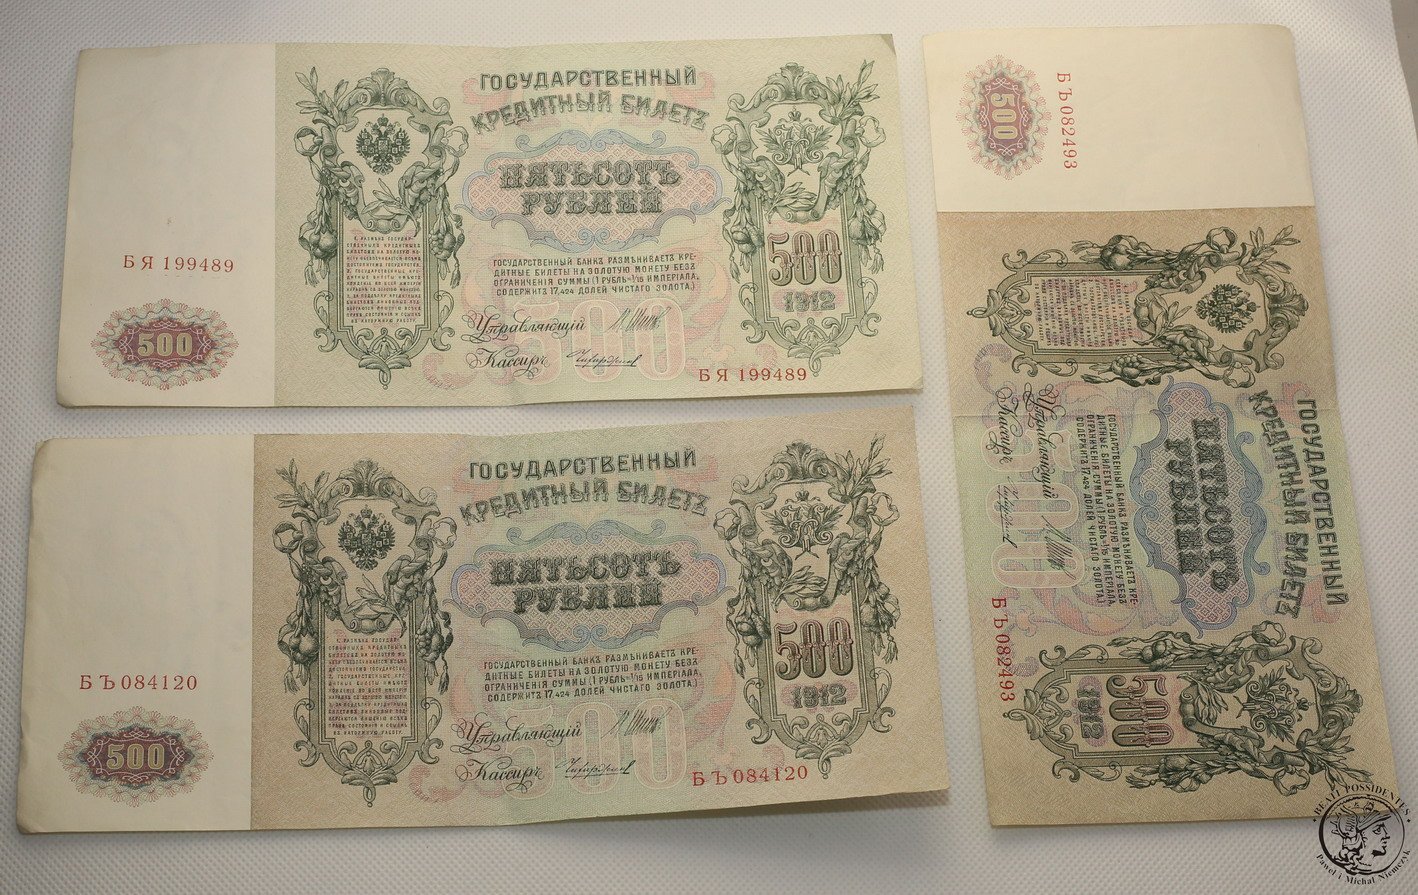 Rosja banknoty 500 Rubli 1912 lot 3 sztuk